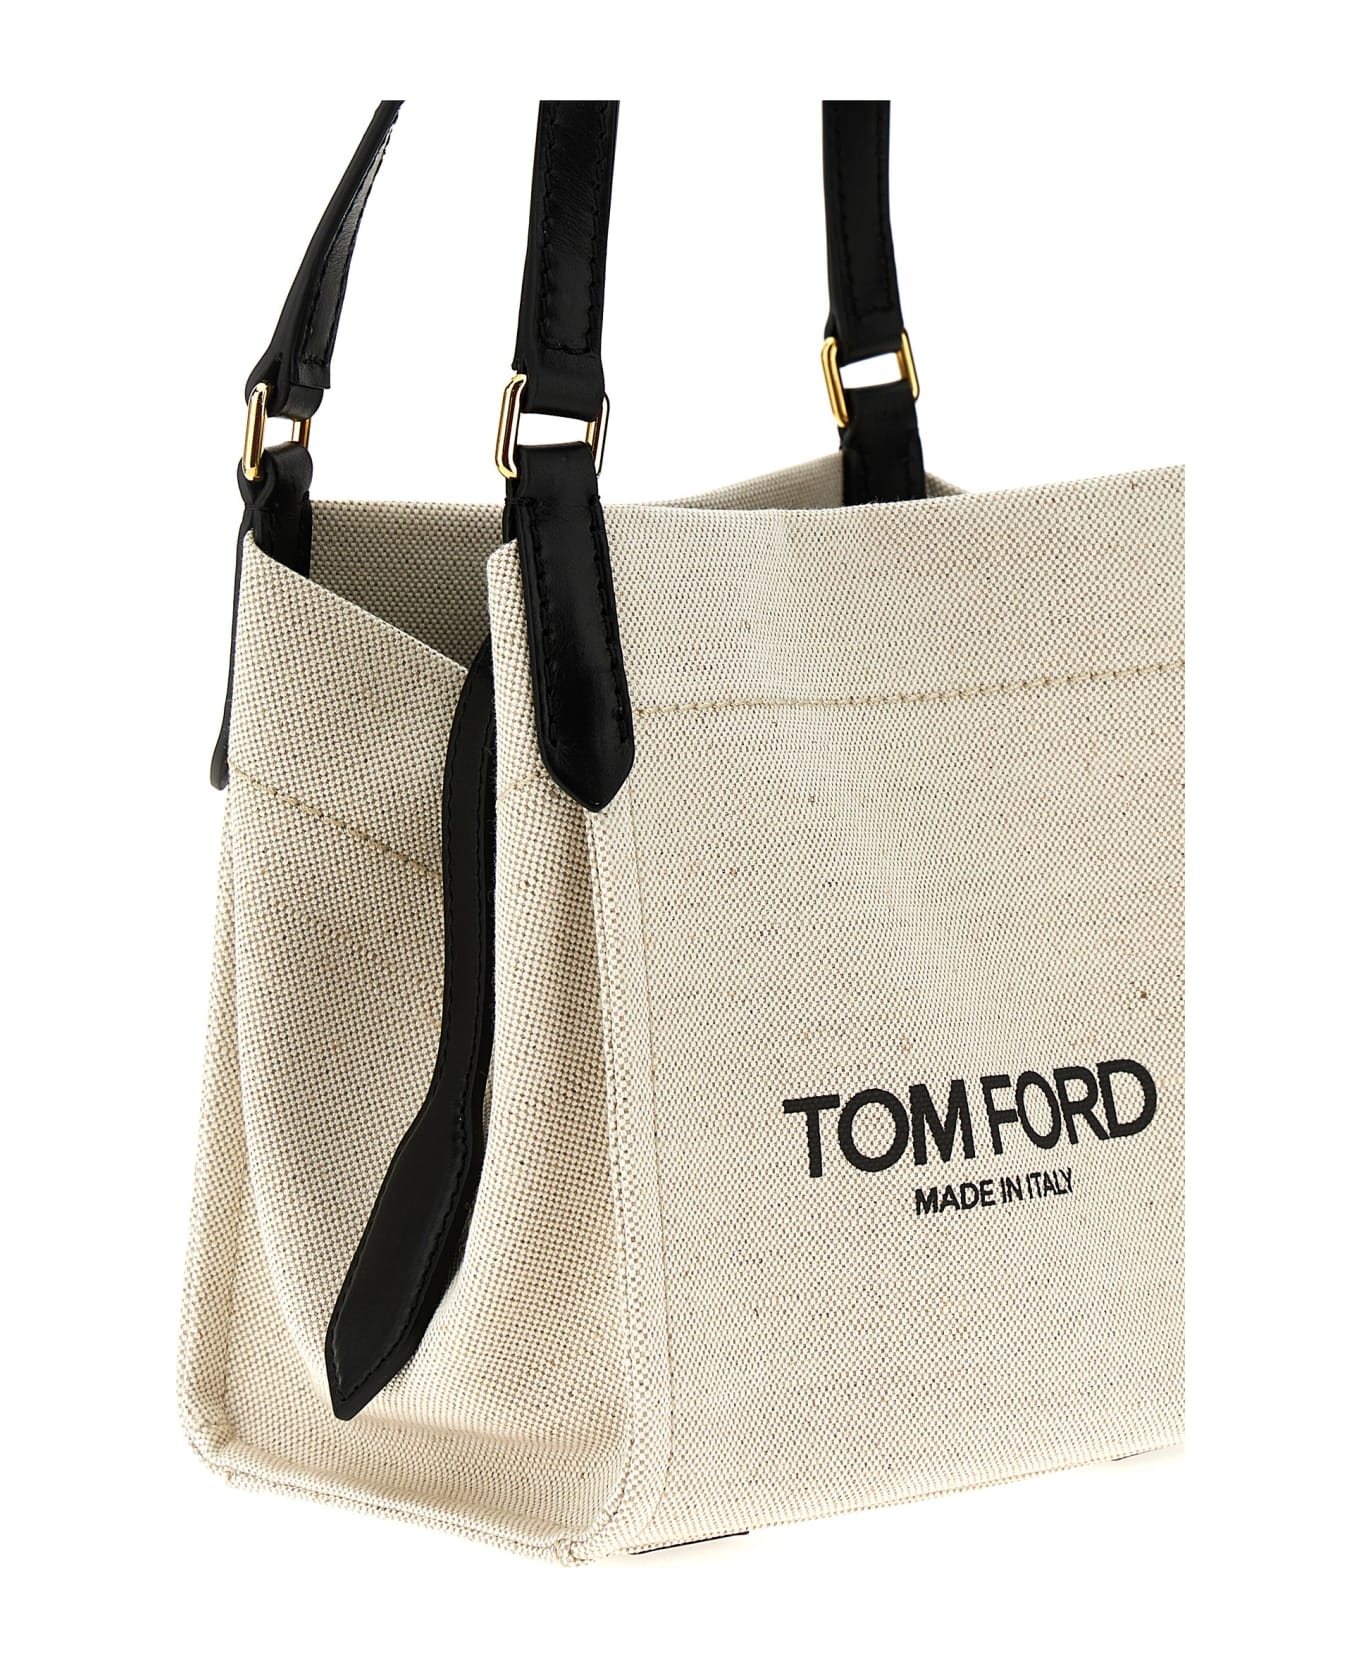 Tom Ford Logo Canvas Handbag - NEUTRALS/BLACK